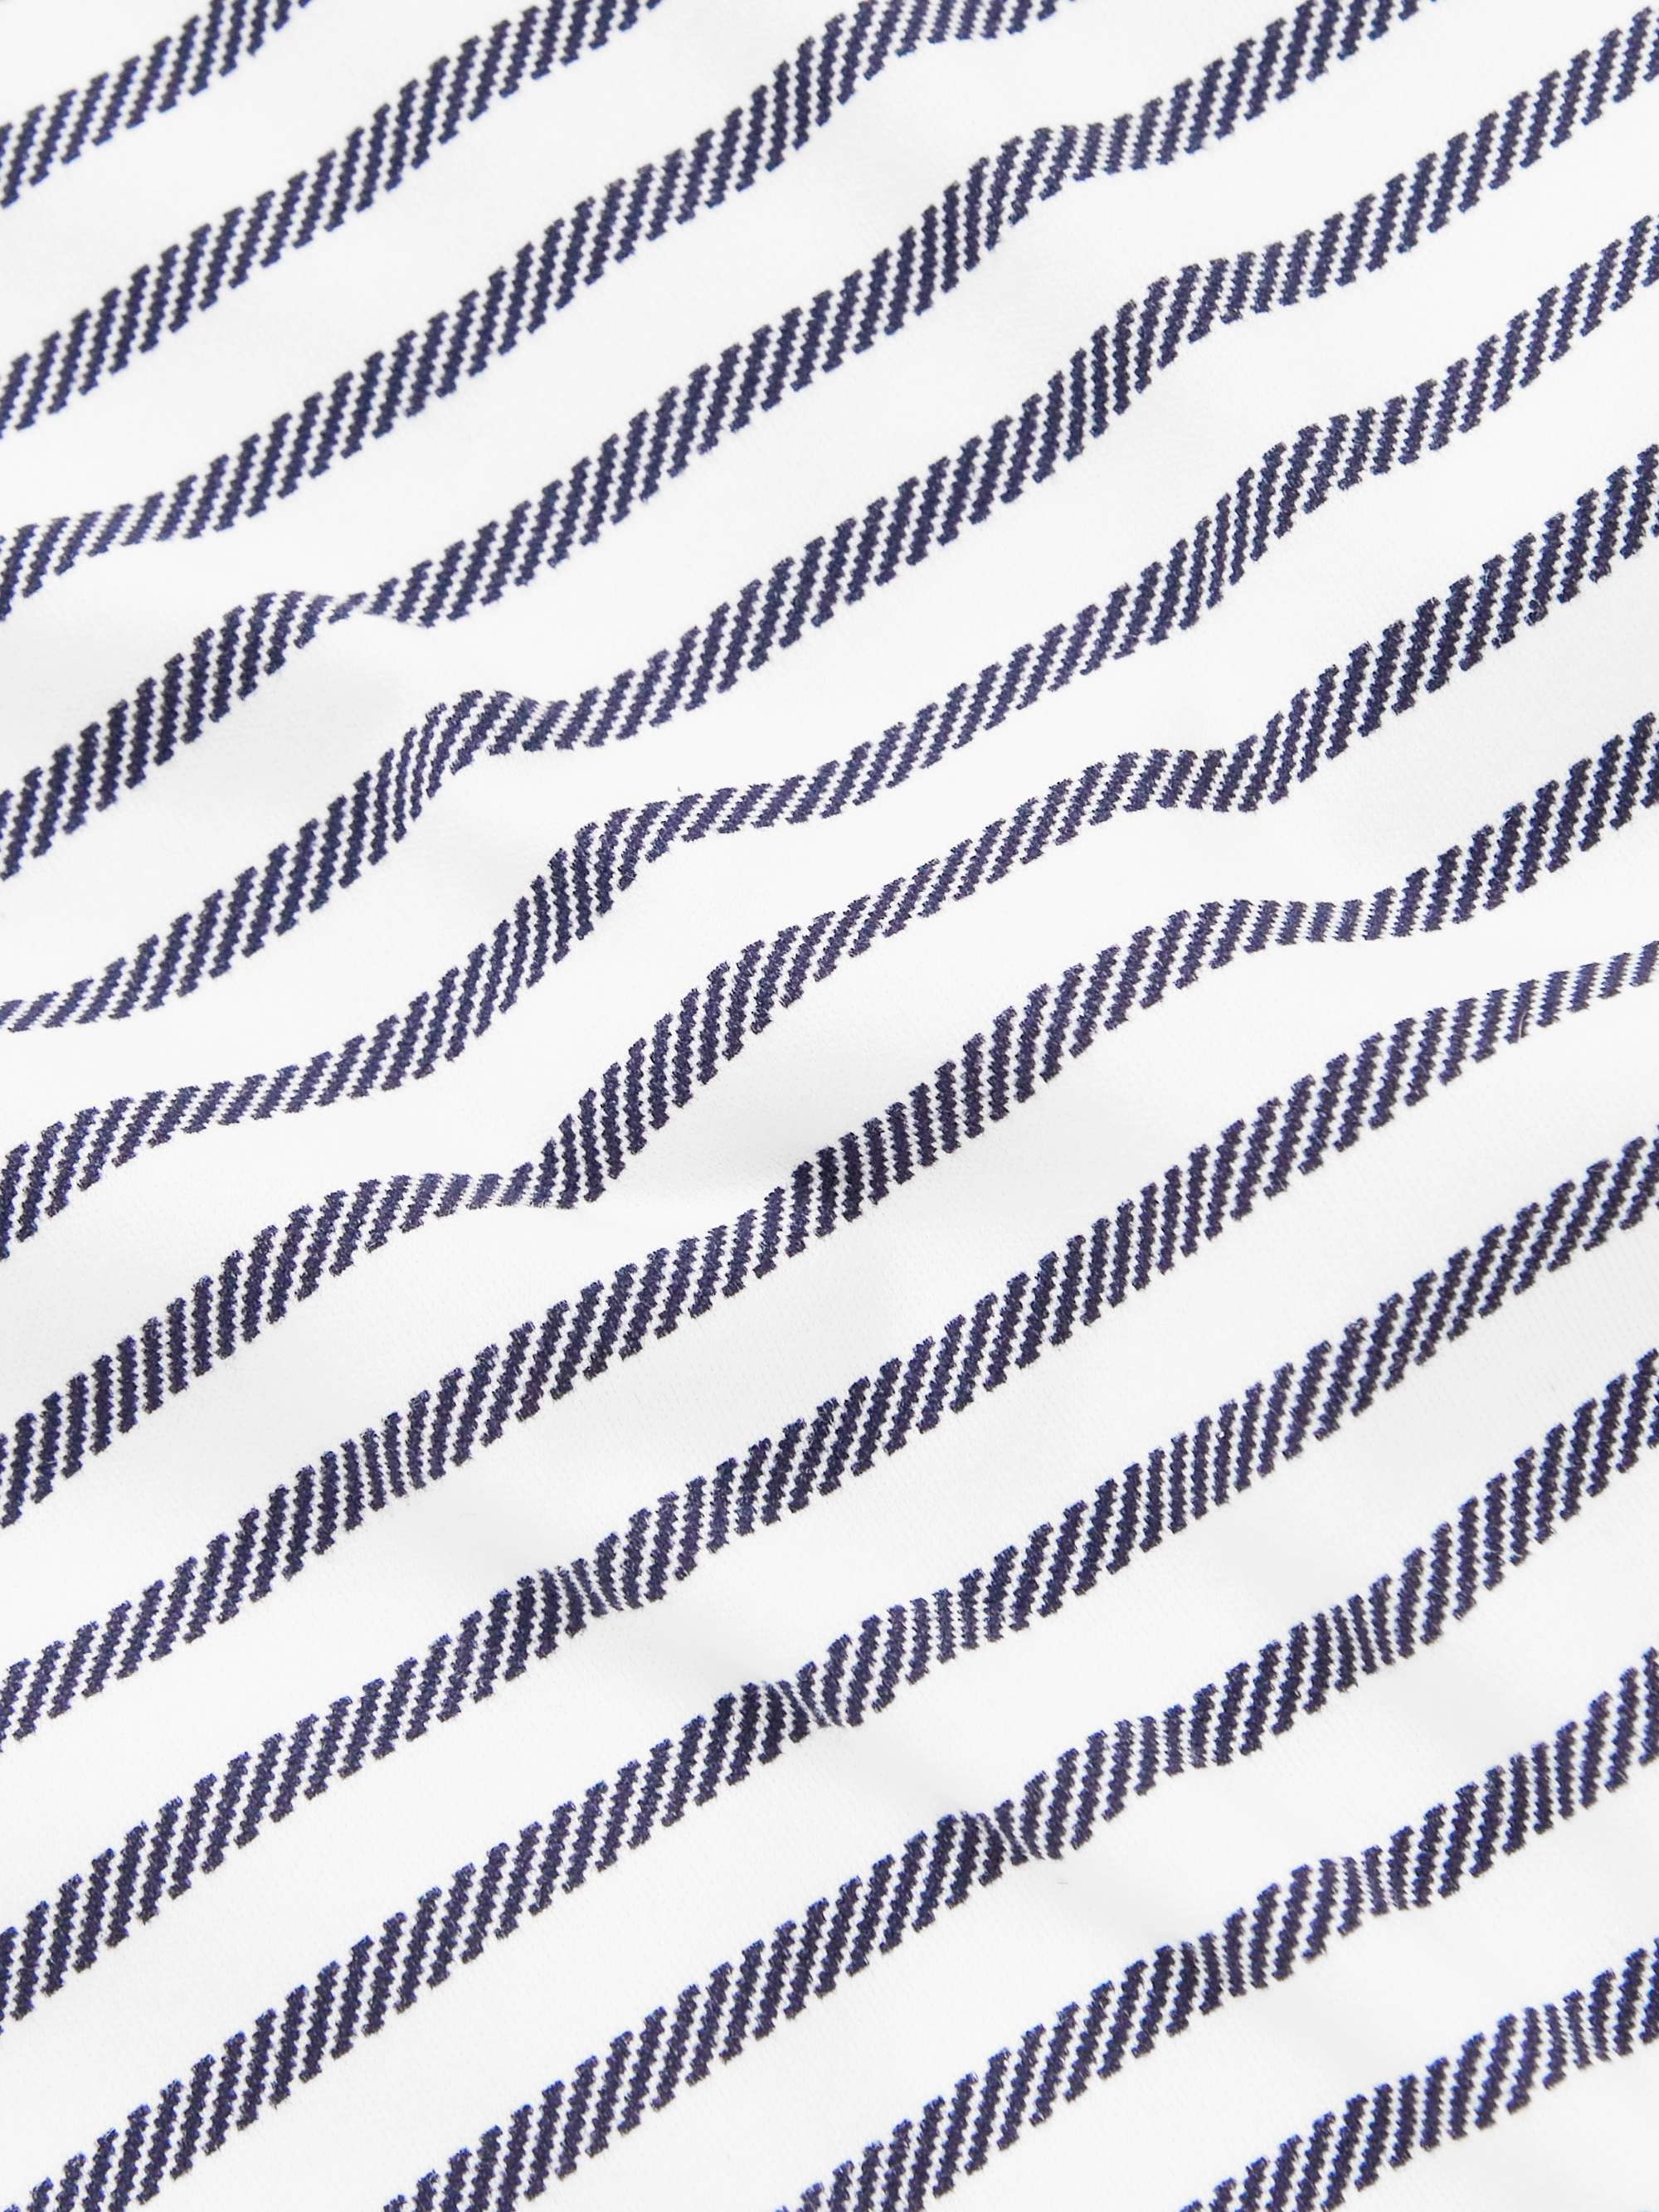 GIORGIO ARMANI Striped Cotton-Jersey Polo Shirt